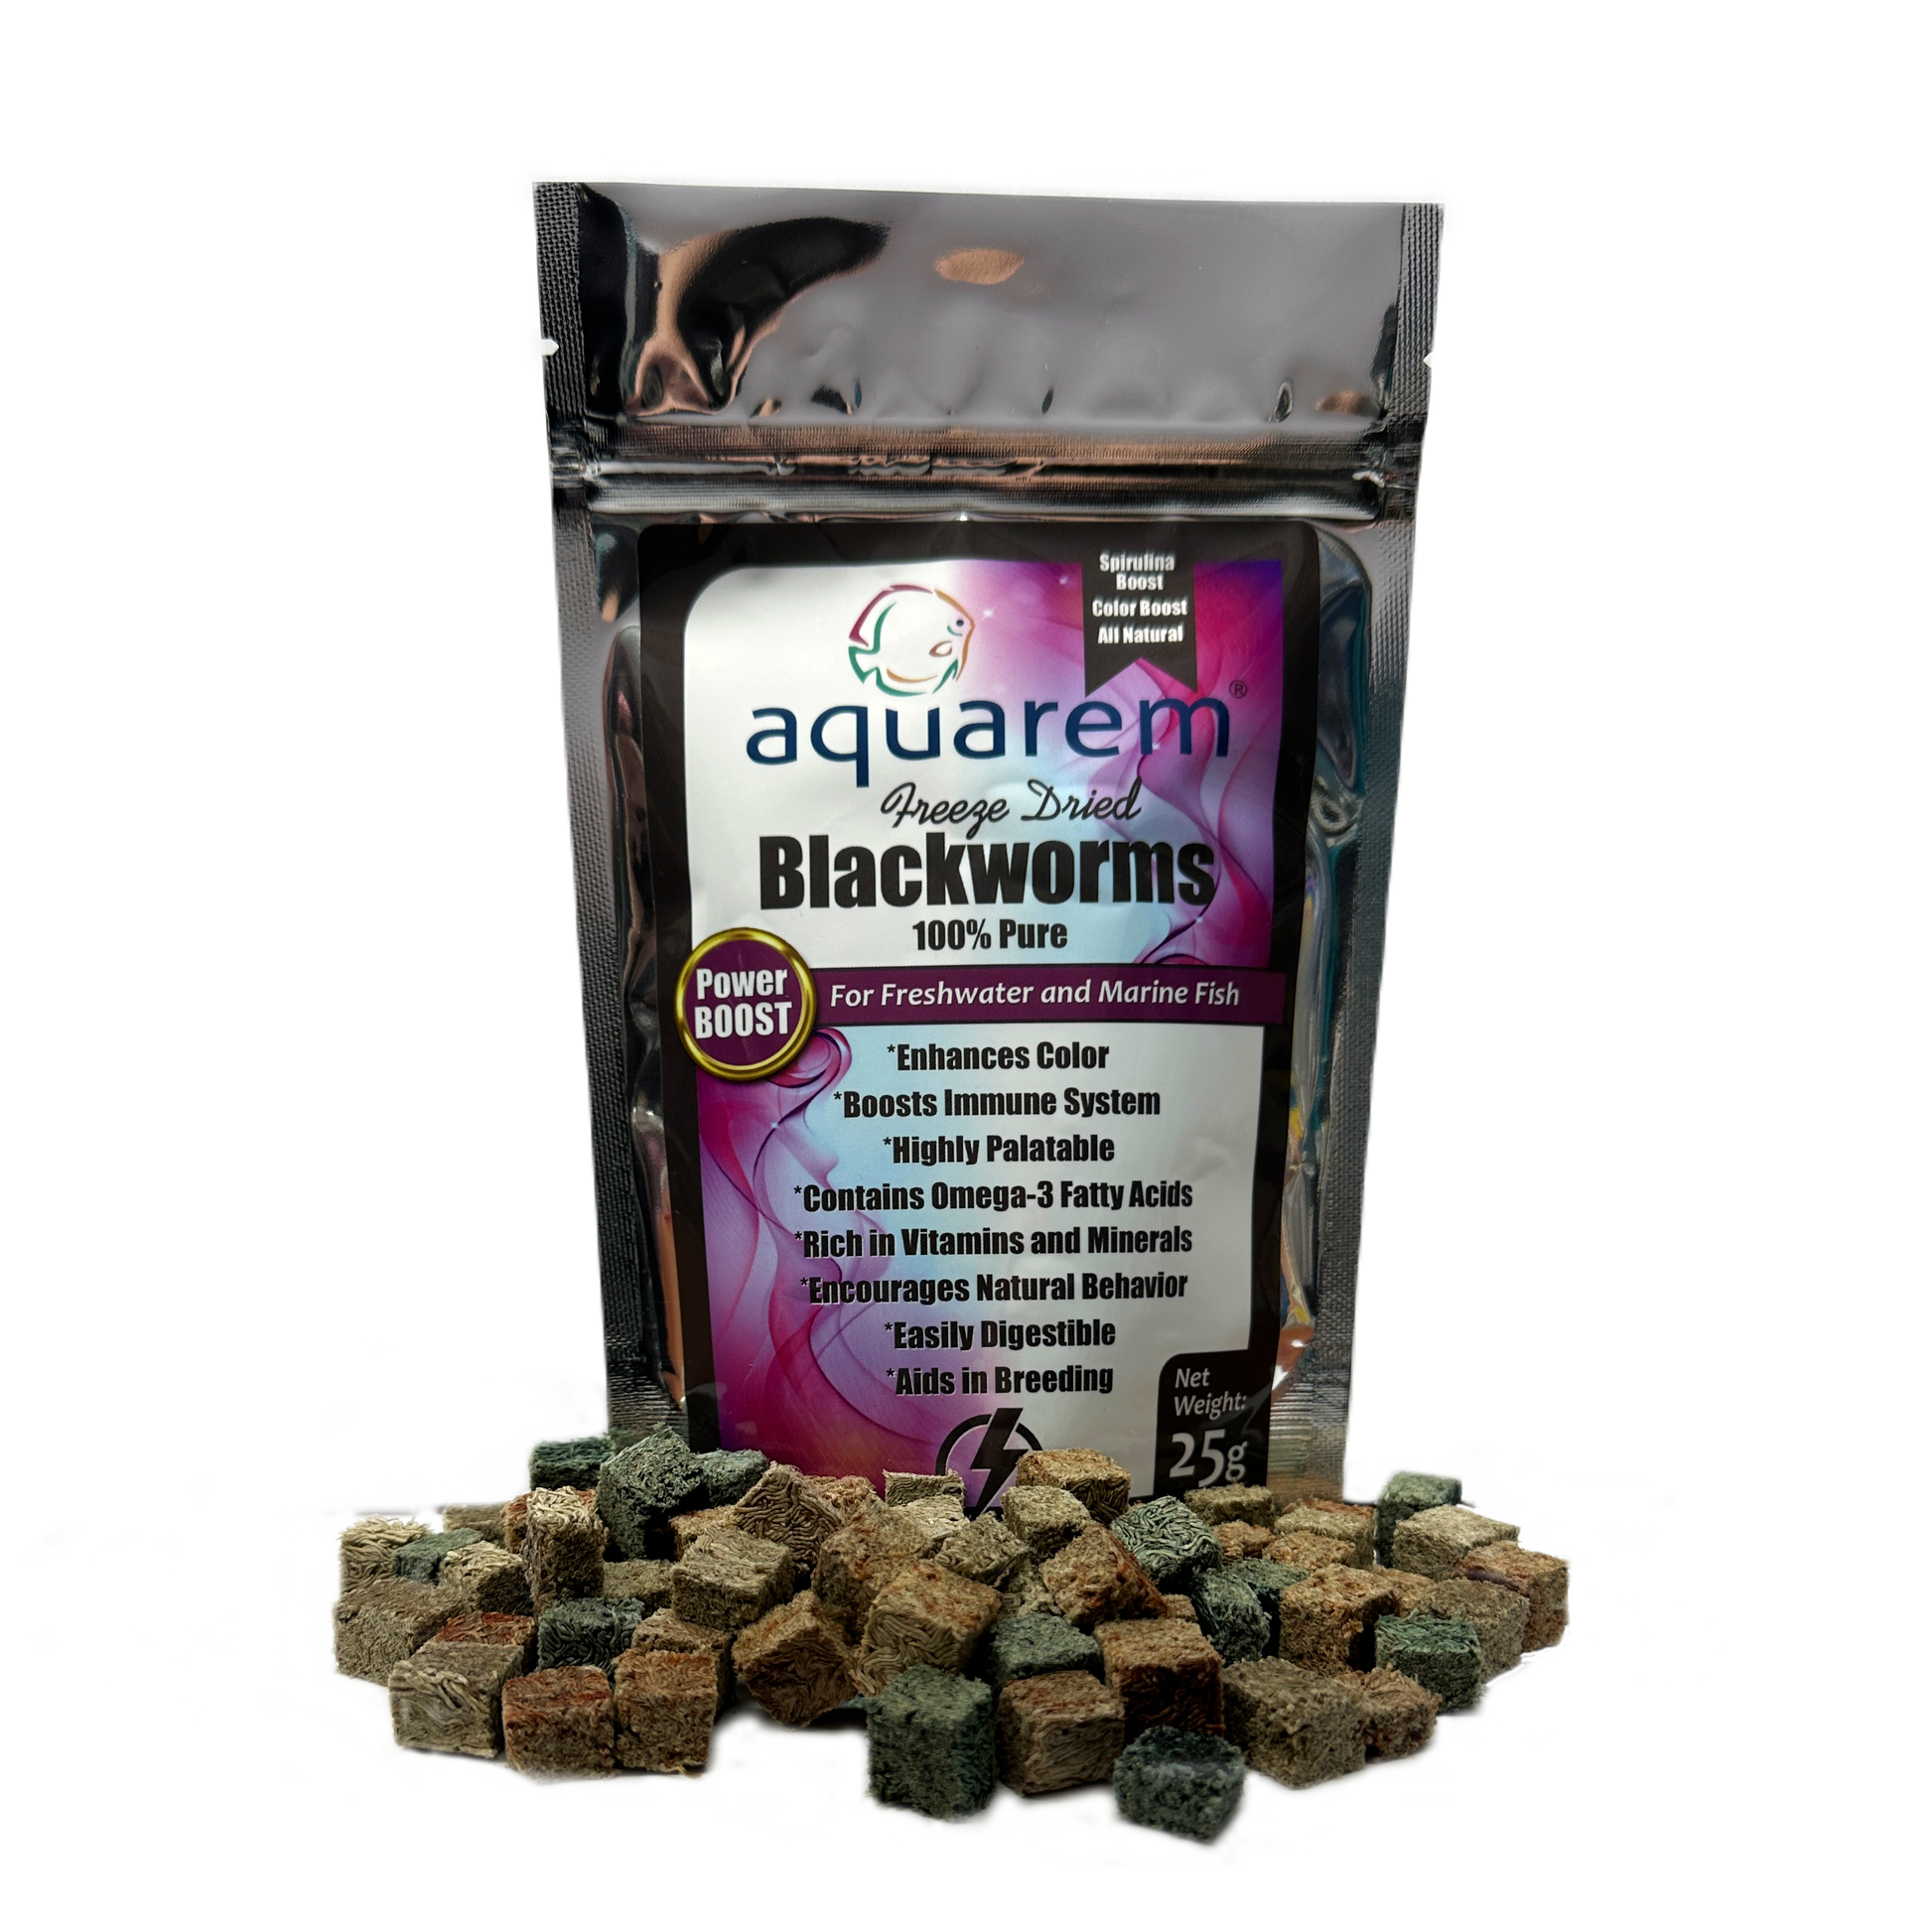 Premium Freeze Dried Blackworms for Aquatic Pets | Super Cichlids Power Boost Mix (25g) - Color-Spirulina-Pure 195893249848 Super Cichlids